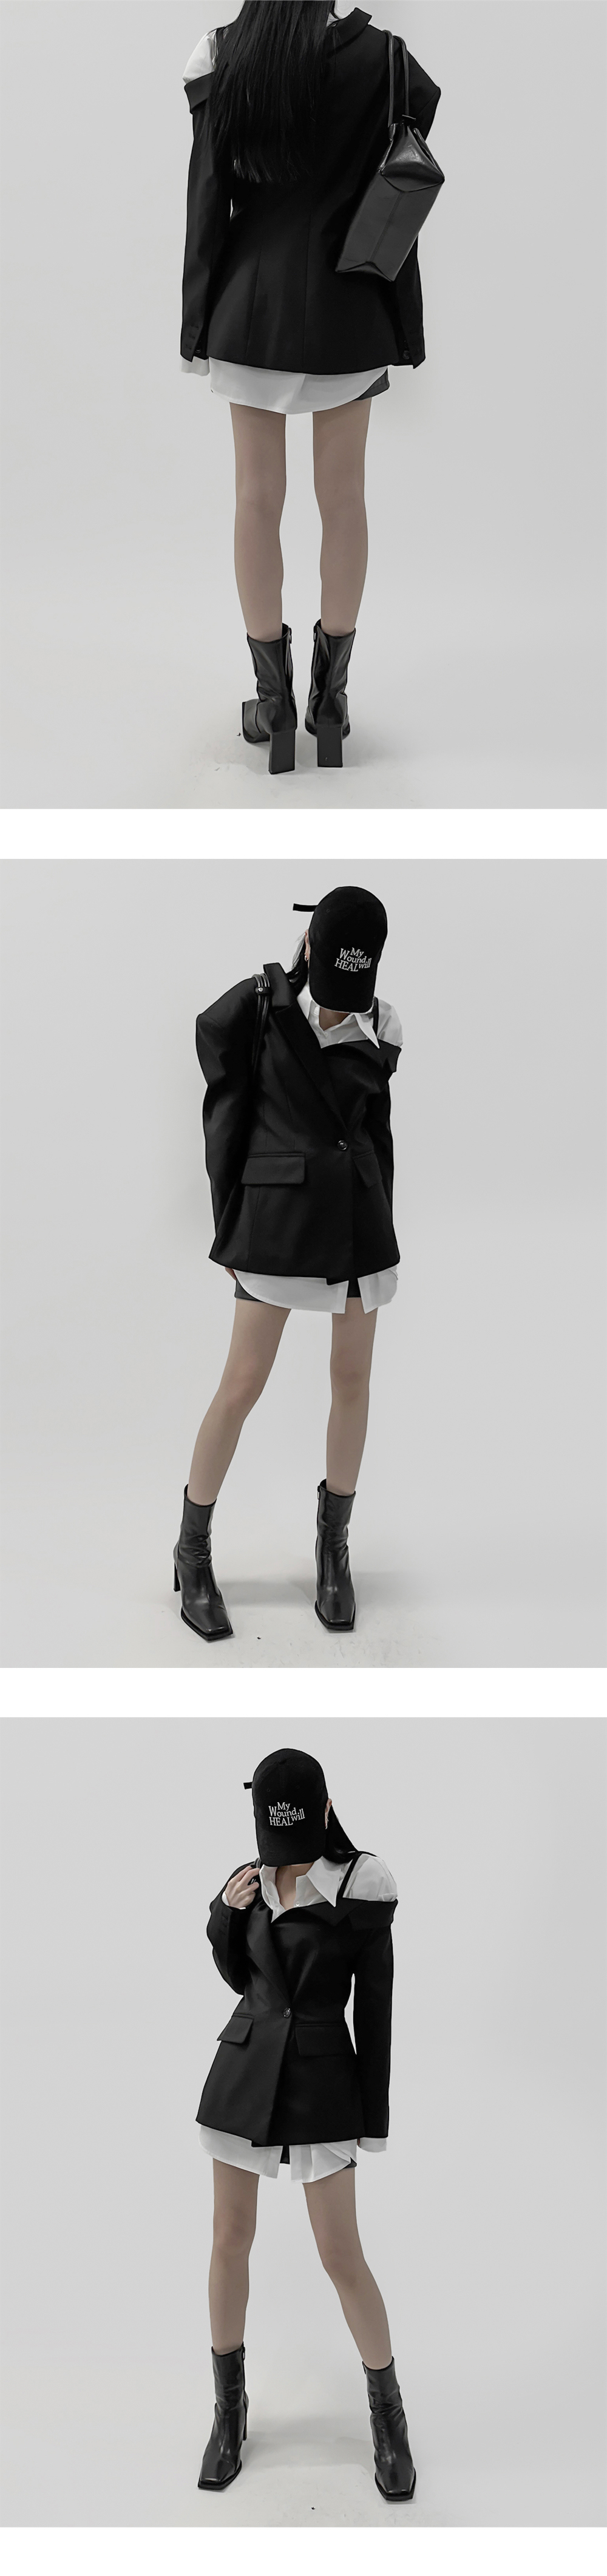 dress model image-S1L3